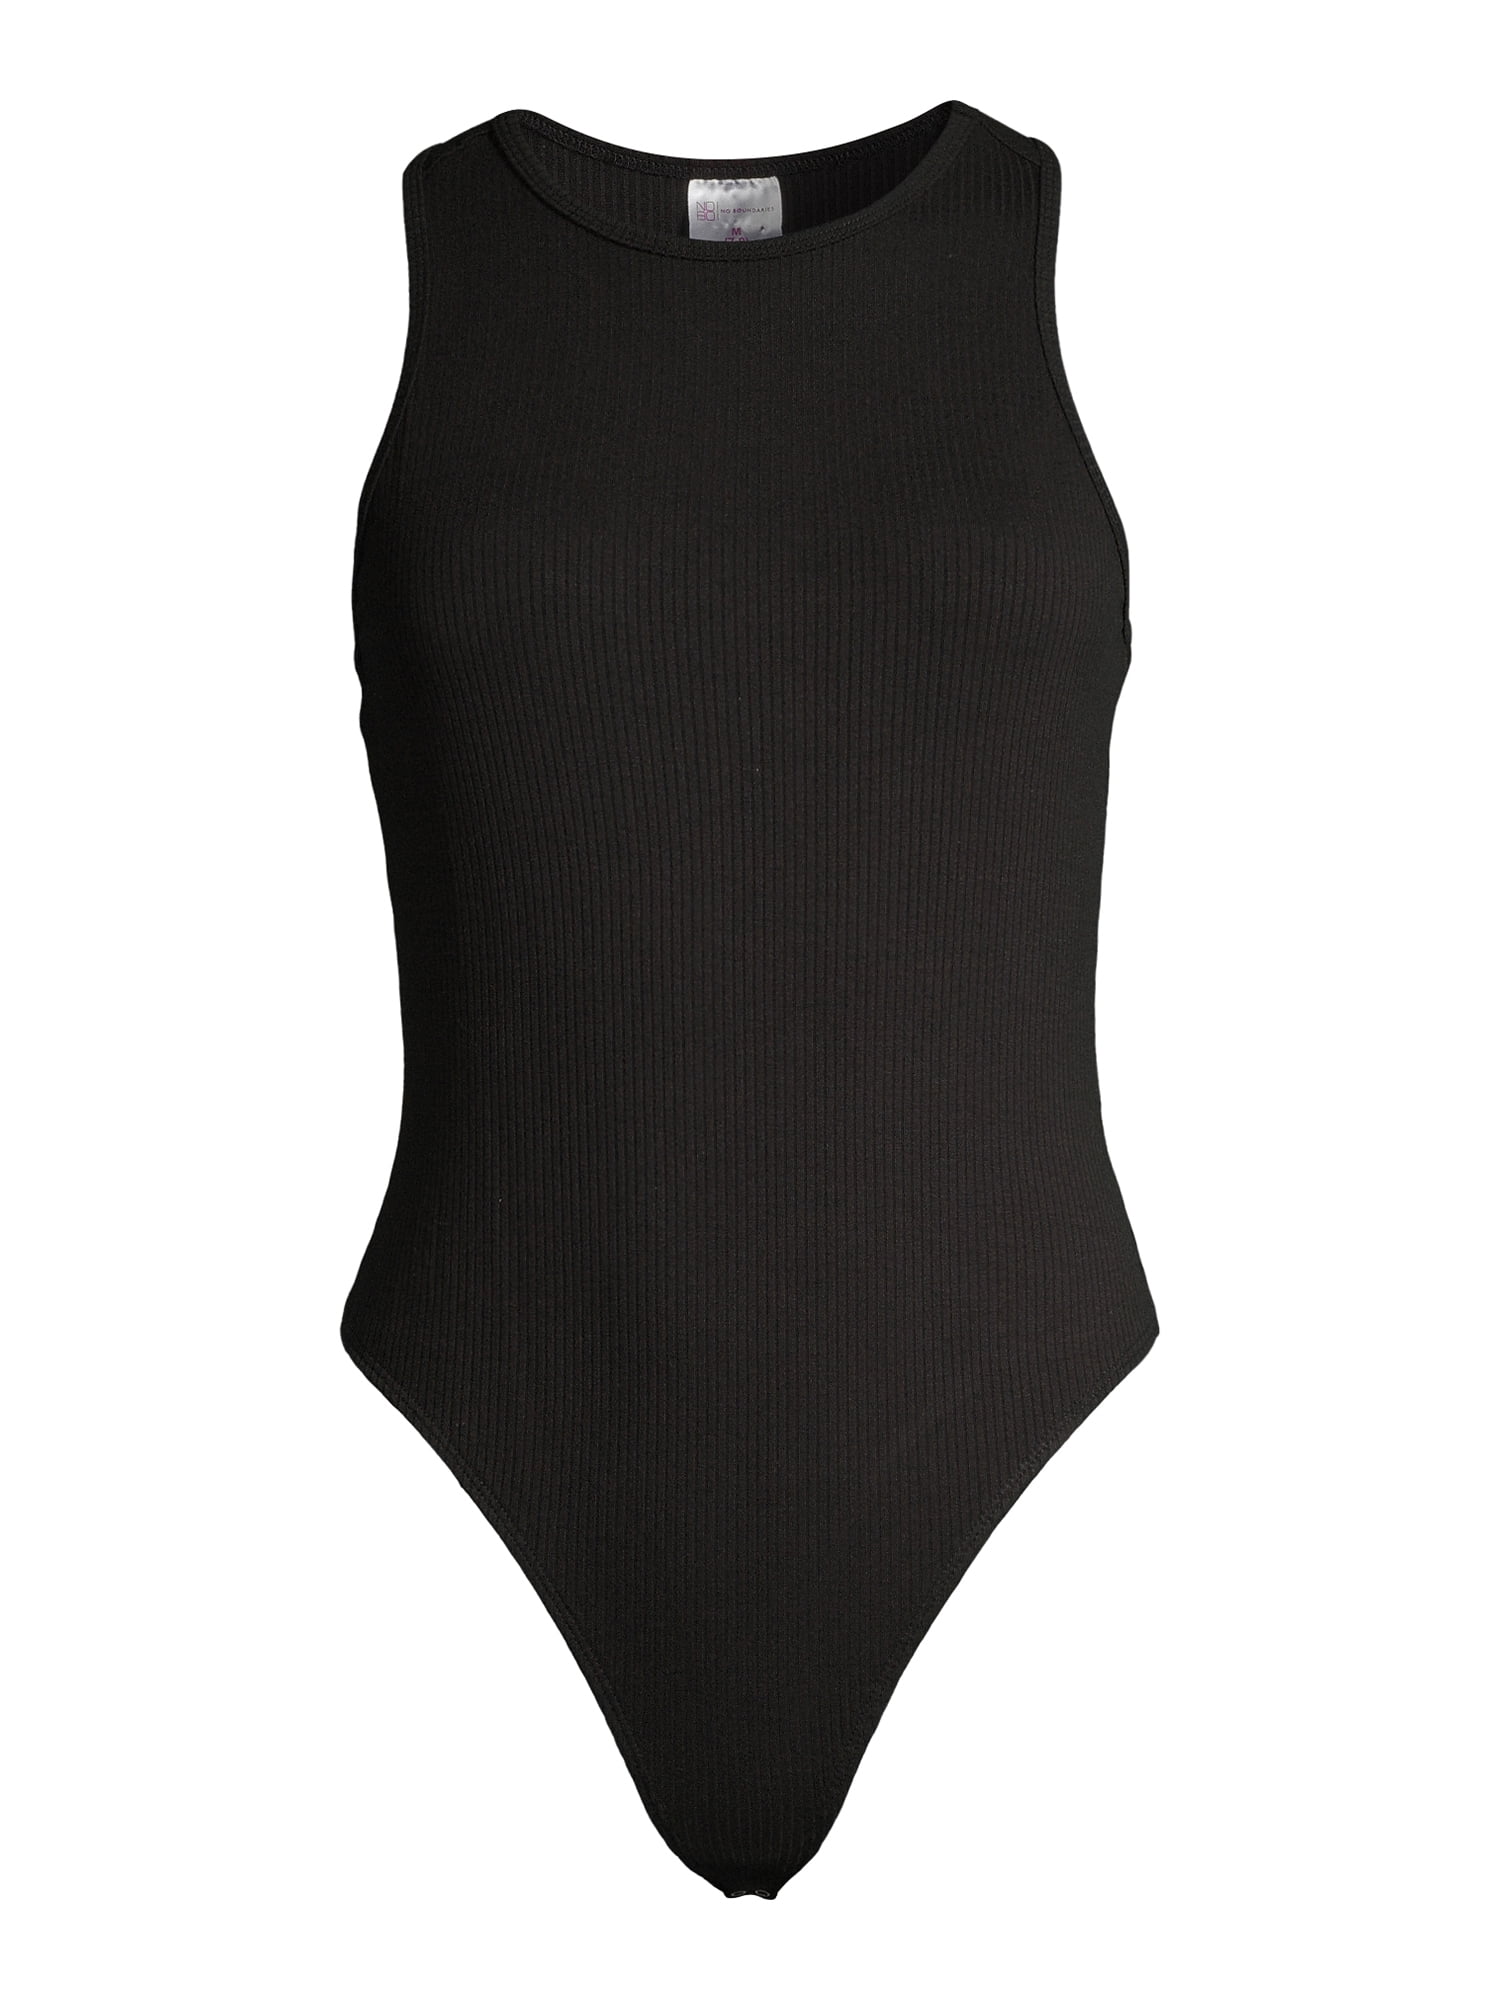 Black High Neck Ribbed Cut Out Bodysuit 1825220 Ht Ml - Buy Black